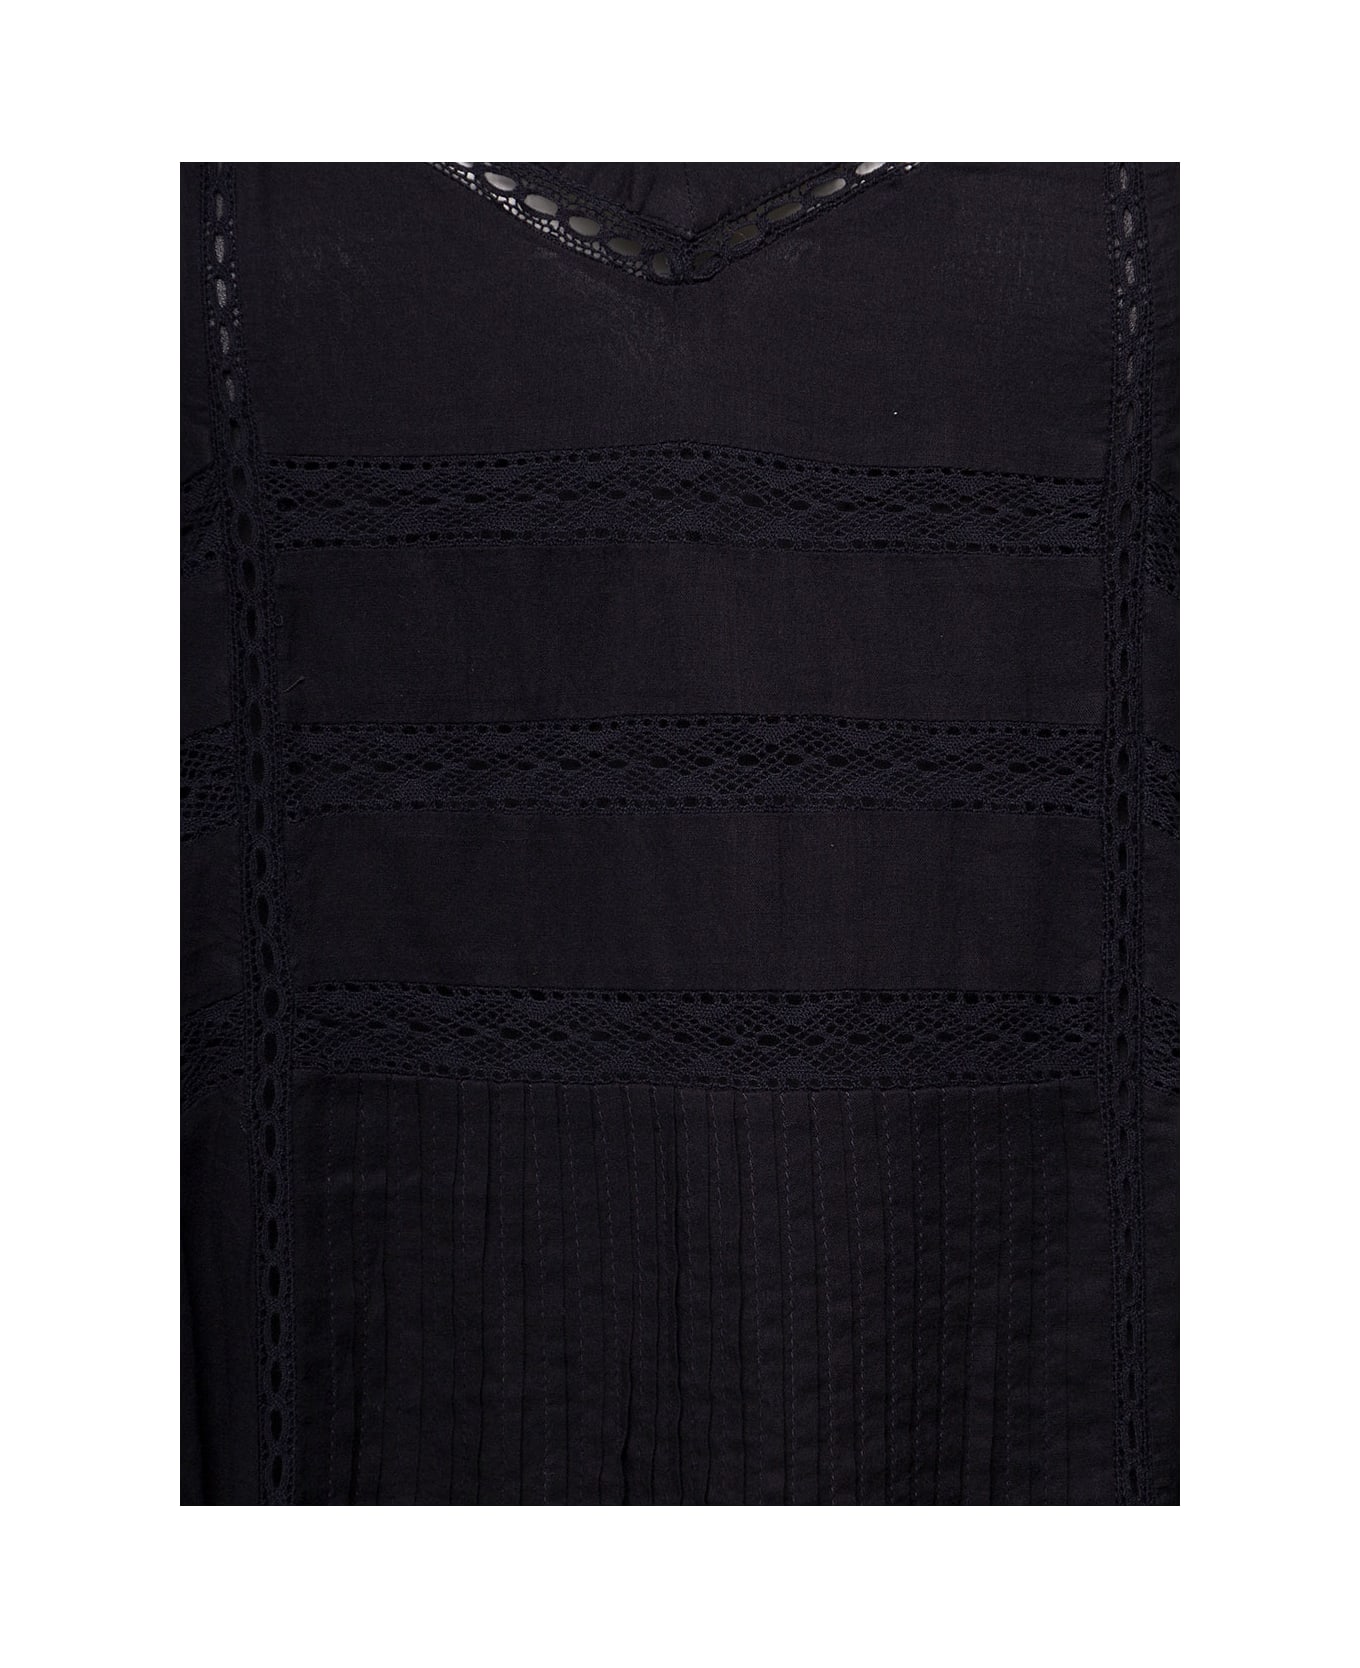 Isabel Marant Étoile Black Mid-length Flared Dress In Cotton Woman - Black